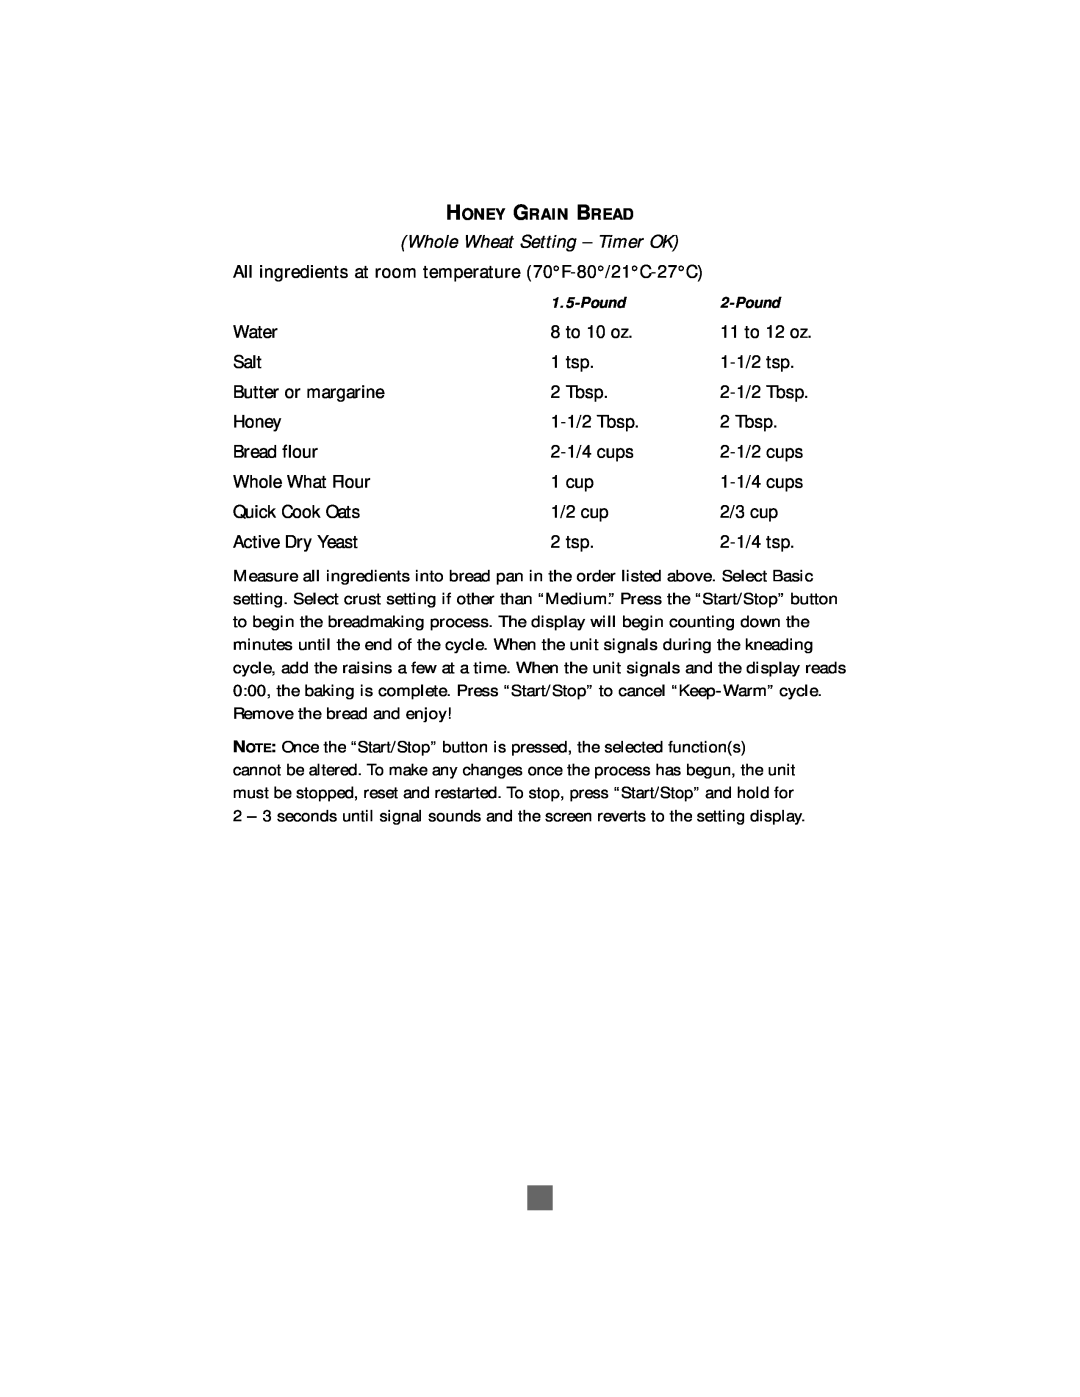 Sunbeam Bread/Dough Maker manual Whole Wheat Setting - Timer OK, Honey Grain Bread 